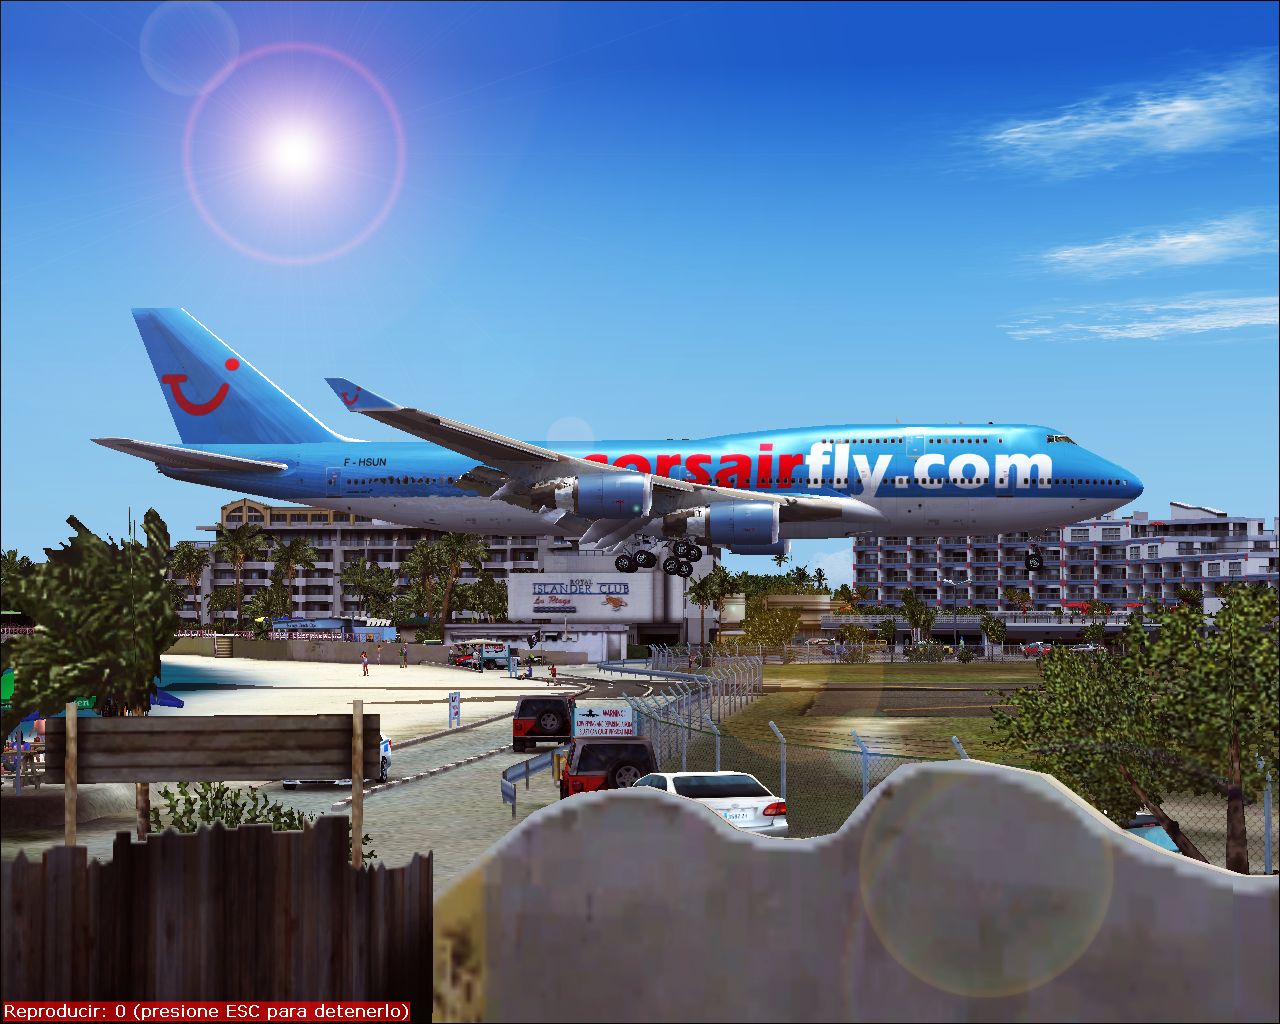 http://1.bp.blogspot.com/-KyyyIY6lfbk/T2sPeLozJCI/AAAAAAAAAtg/fkT_V5ym5Xs/s1600/Corsairfly+avion+747.jpg